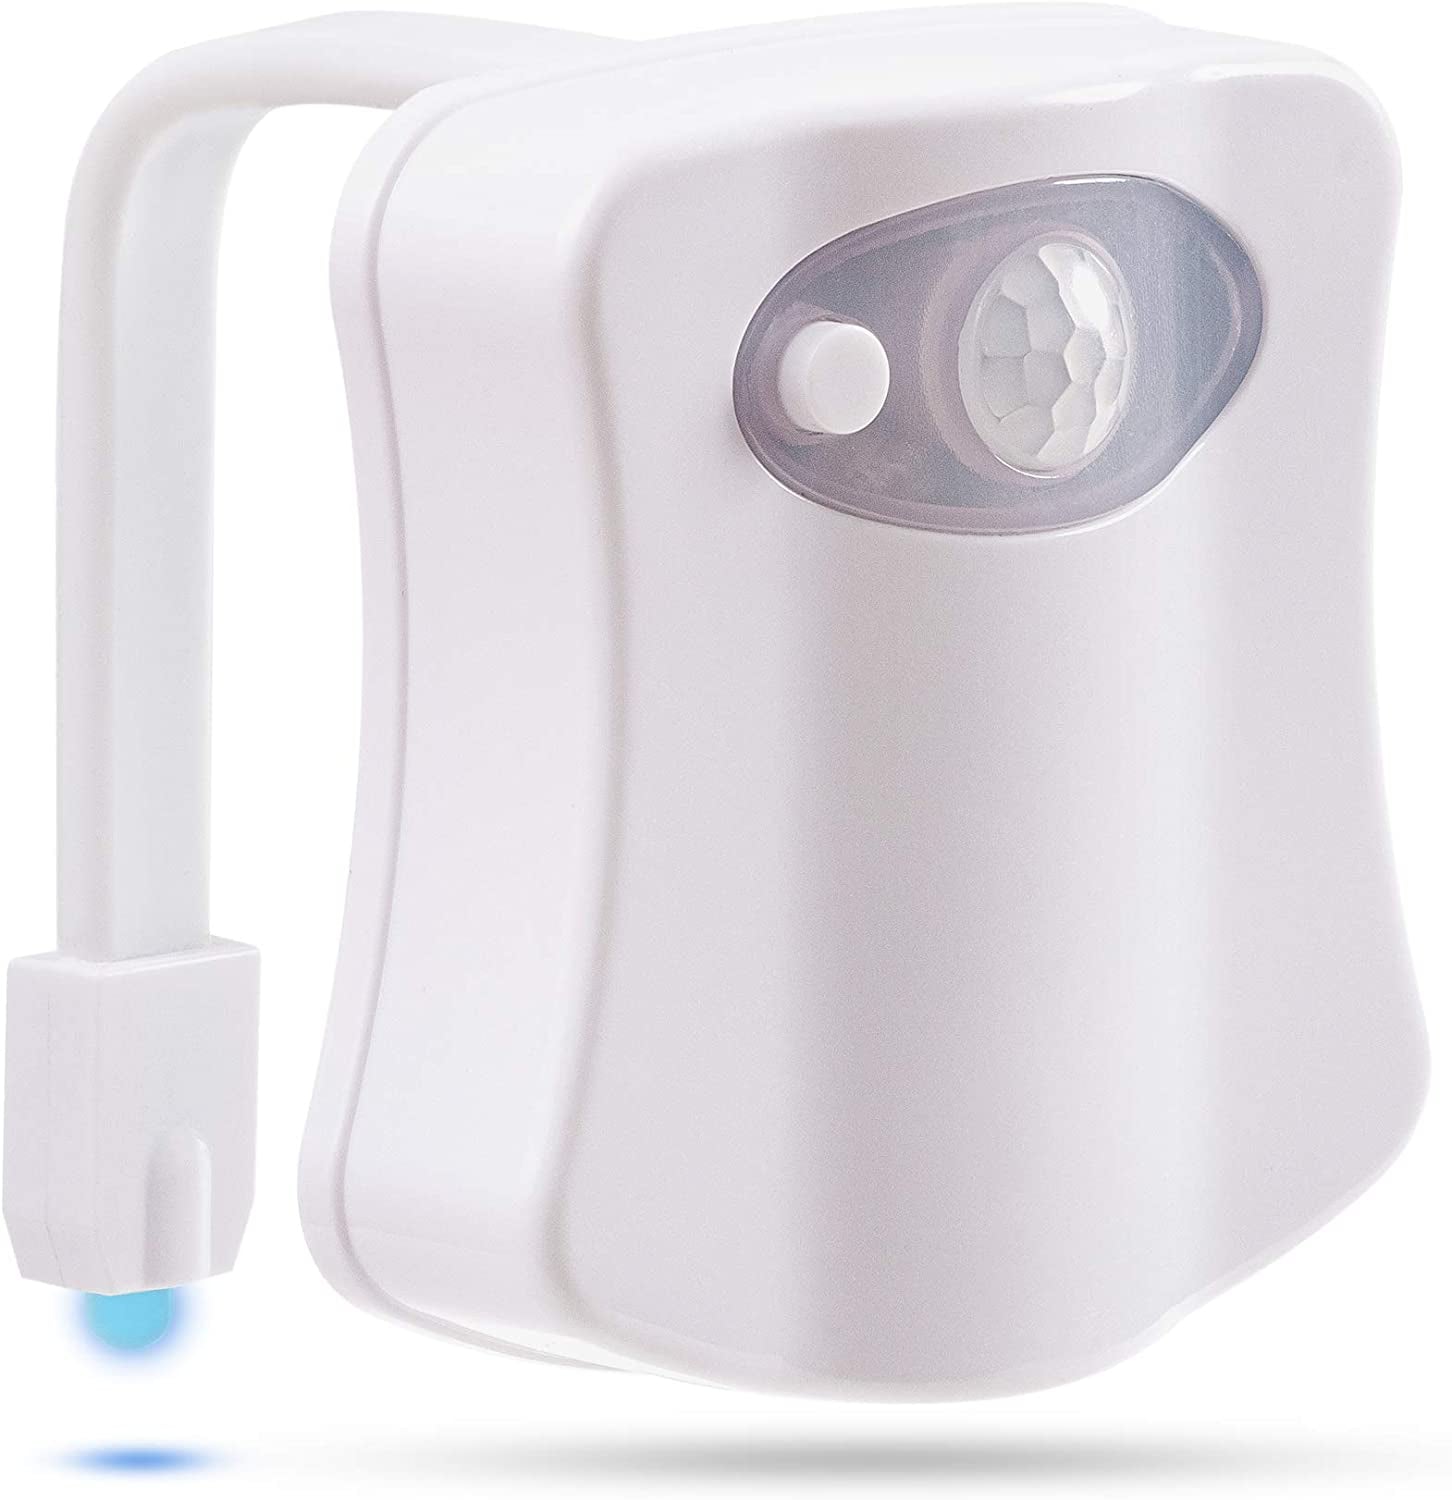 RainBowl Toilet Bowl Night Light with Motion Sensor 